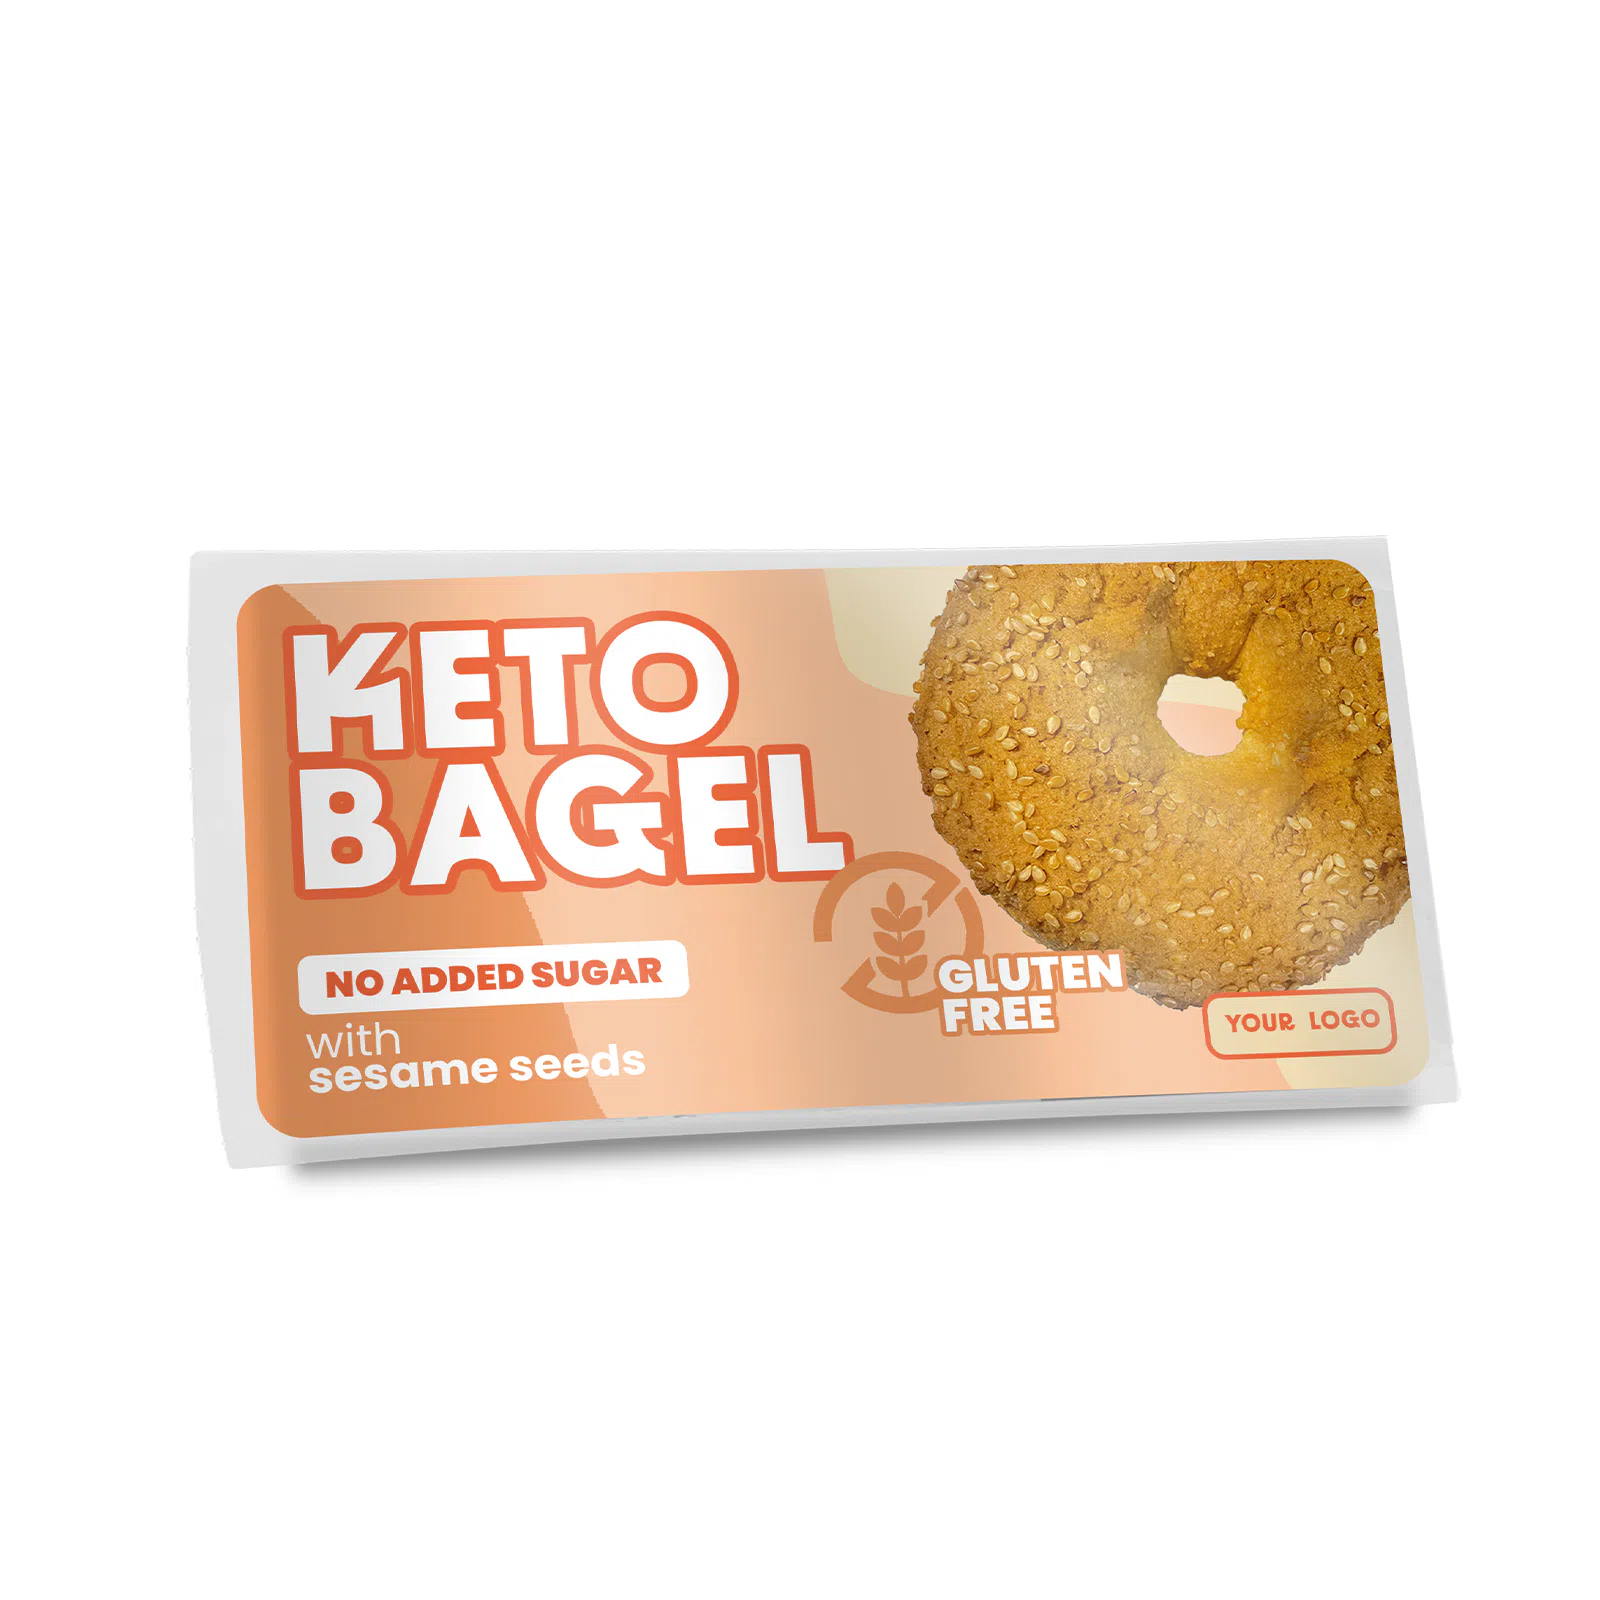 Private label amerpharma keto bagel with sesame seeds gltuen free no added sugar